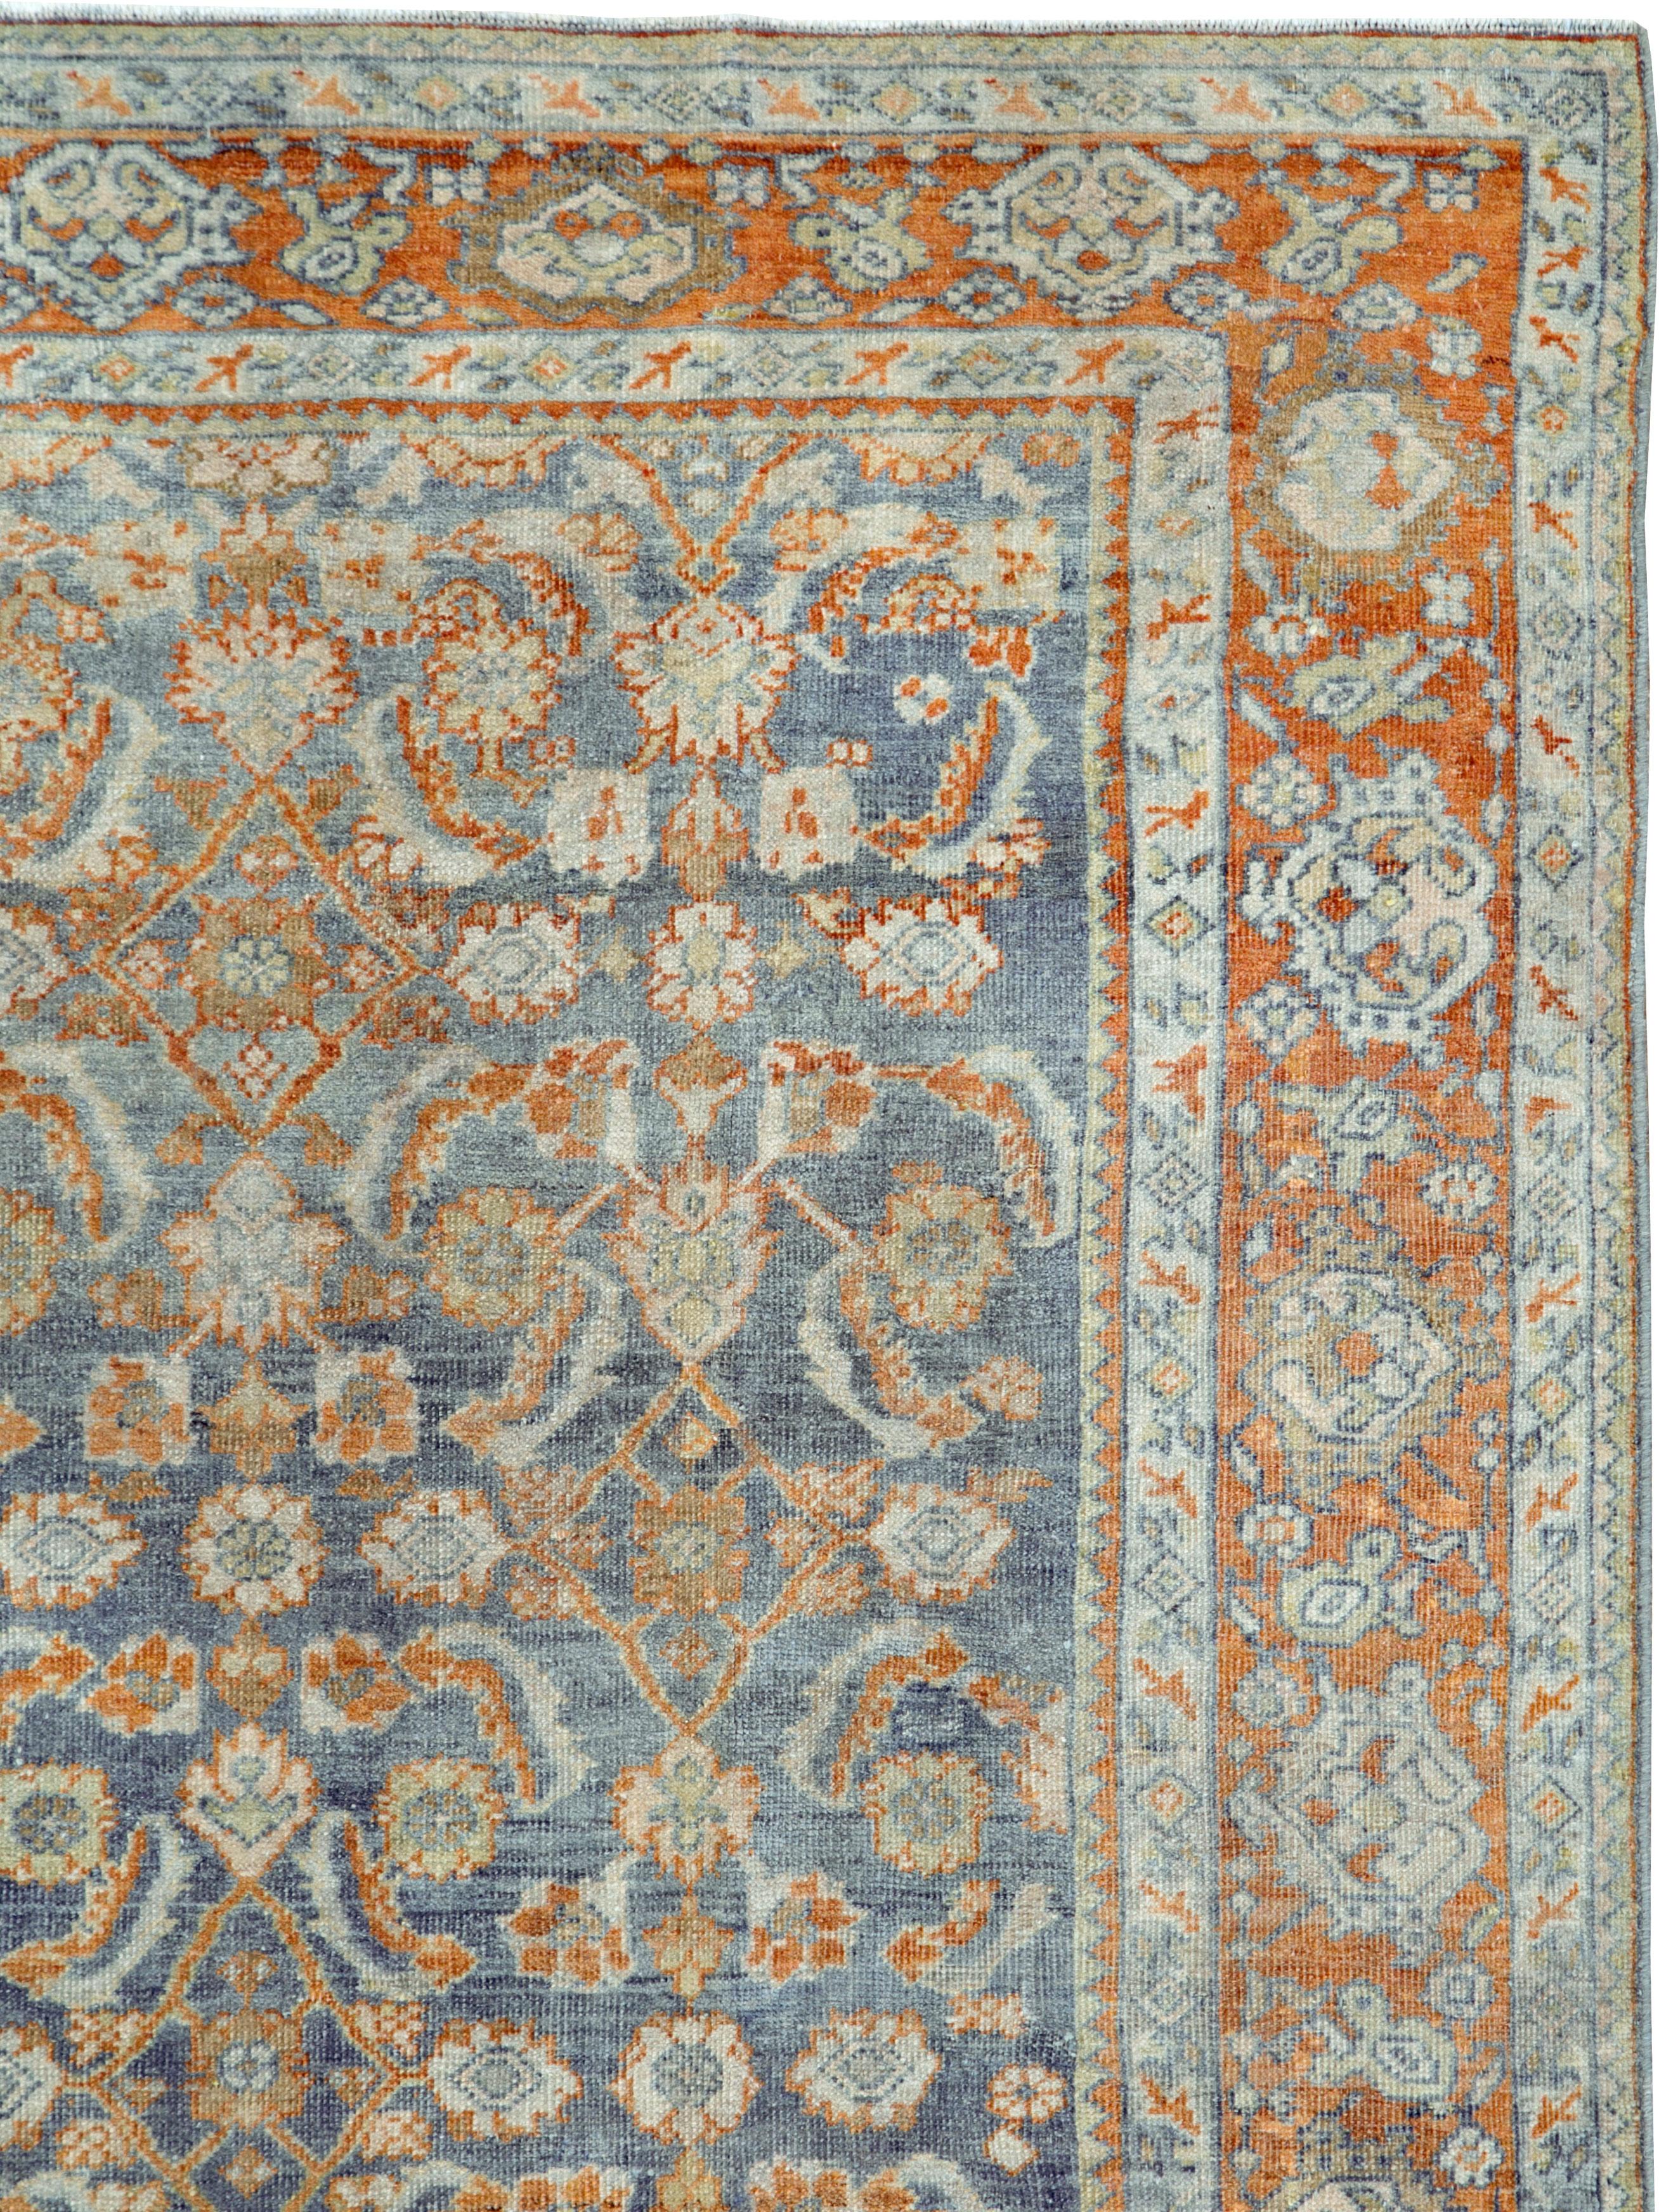 Folk Art Antique Persian Mahal Carpet